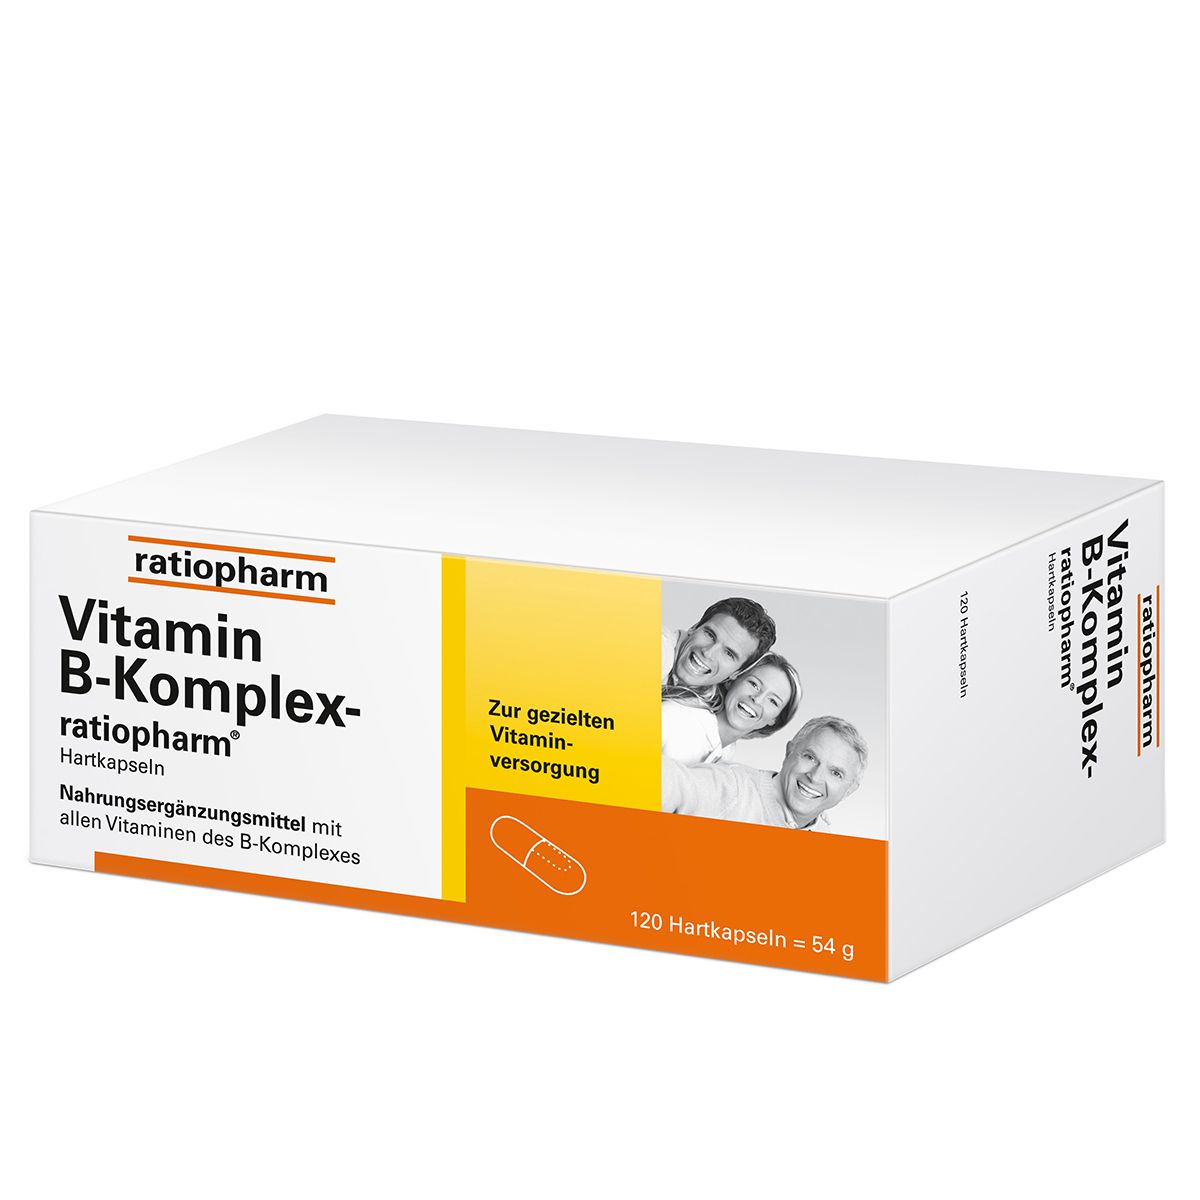 VITAMIN B-KOMPLEX-ratiopharm Kapseln